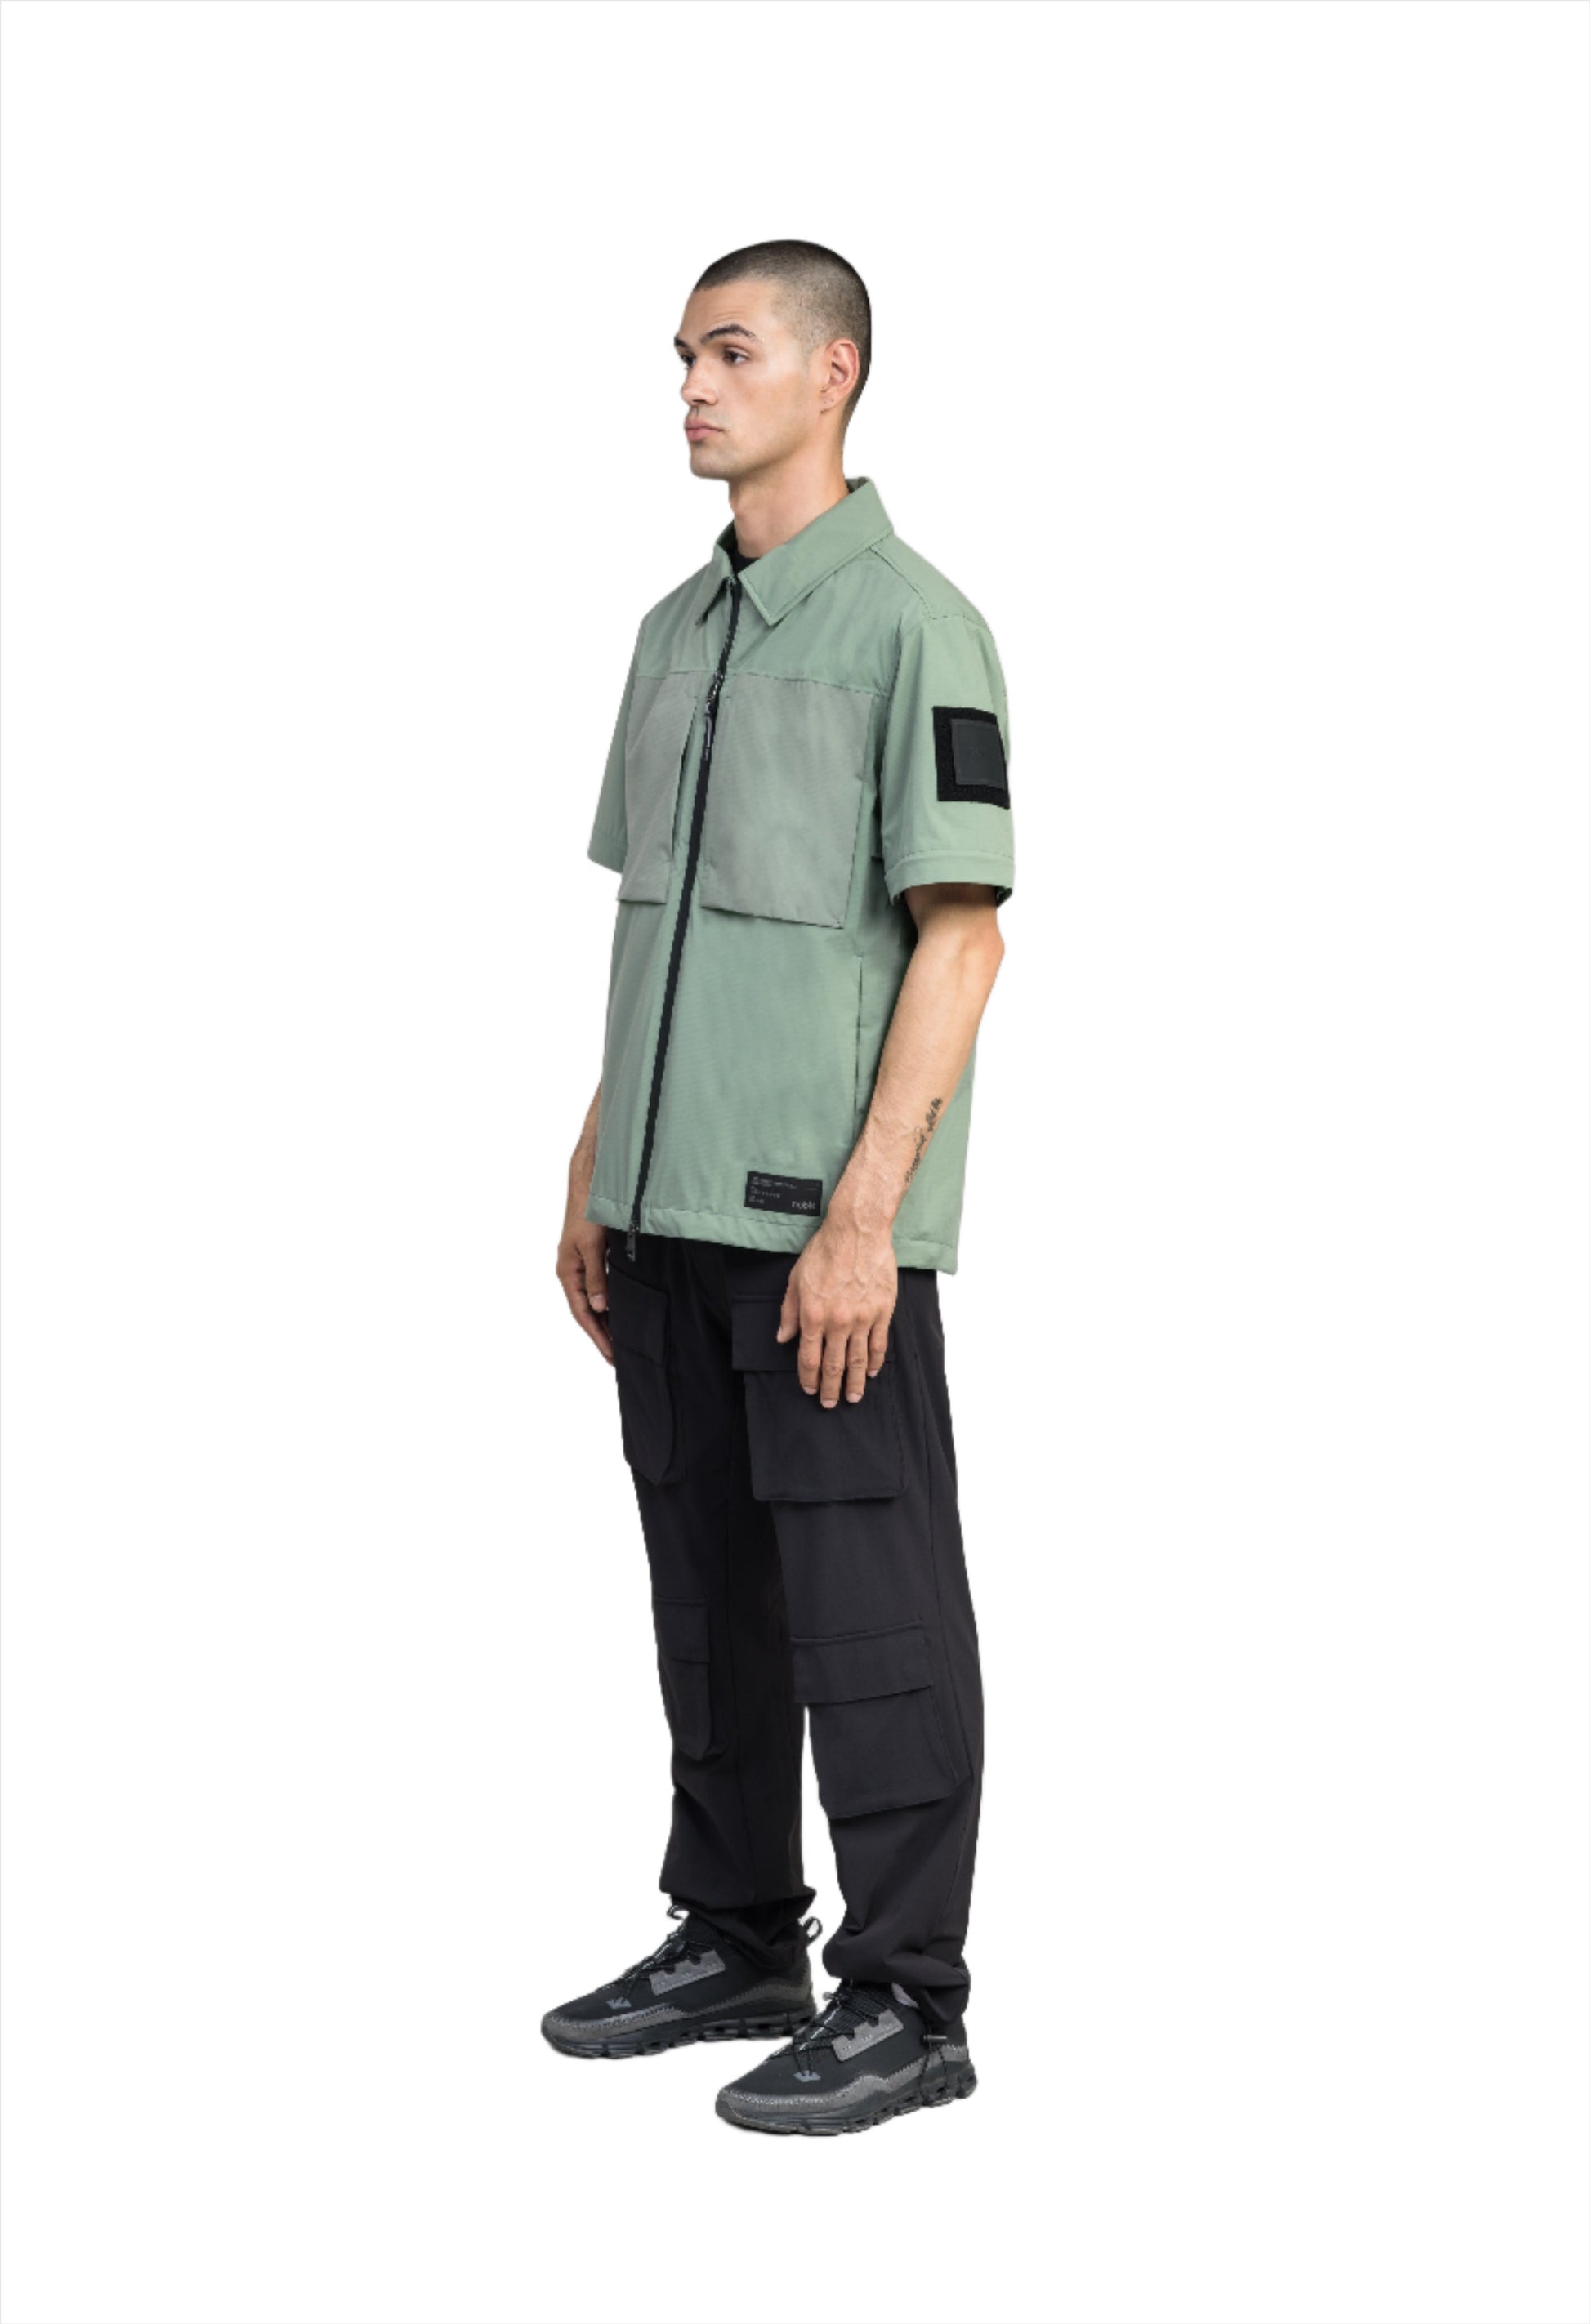 Thurlow Men's Performance Zip Off Sleeve Rain Shirt in hip length, convertible collar, patch chest zipper pockets, hidden in-seam pockets, zip off sleeves, centre front two-way zipper closure, in Duck Green